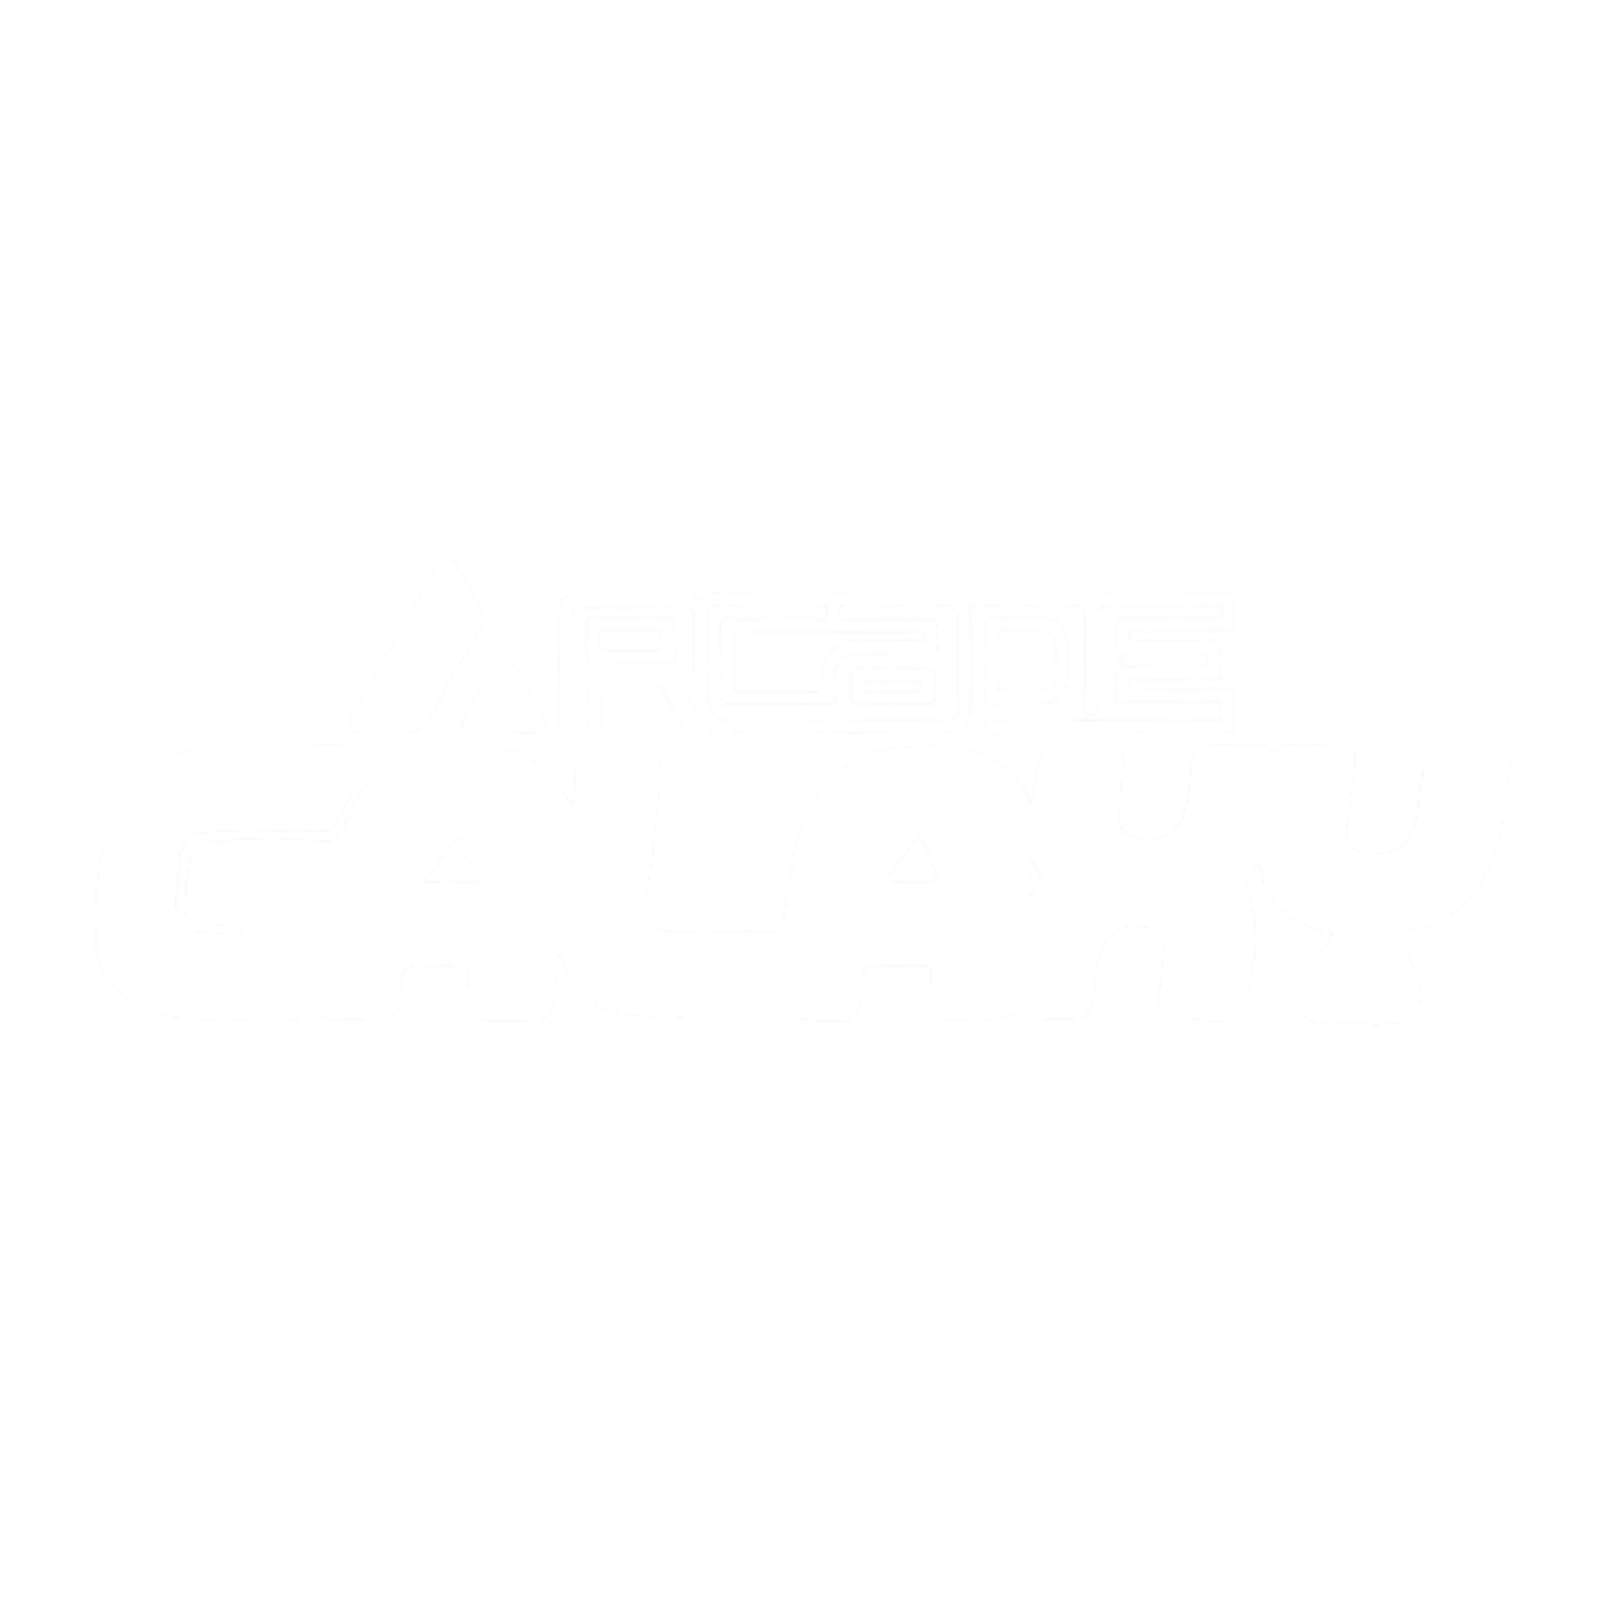 Arcade Galaxy